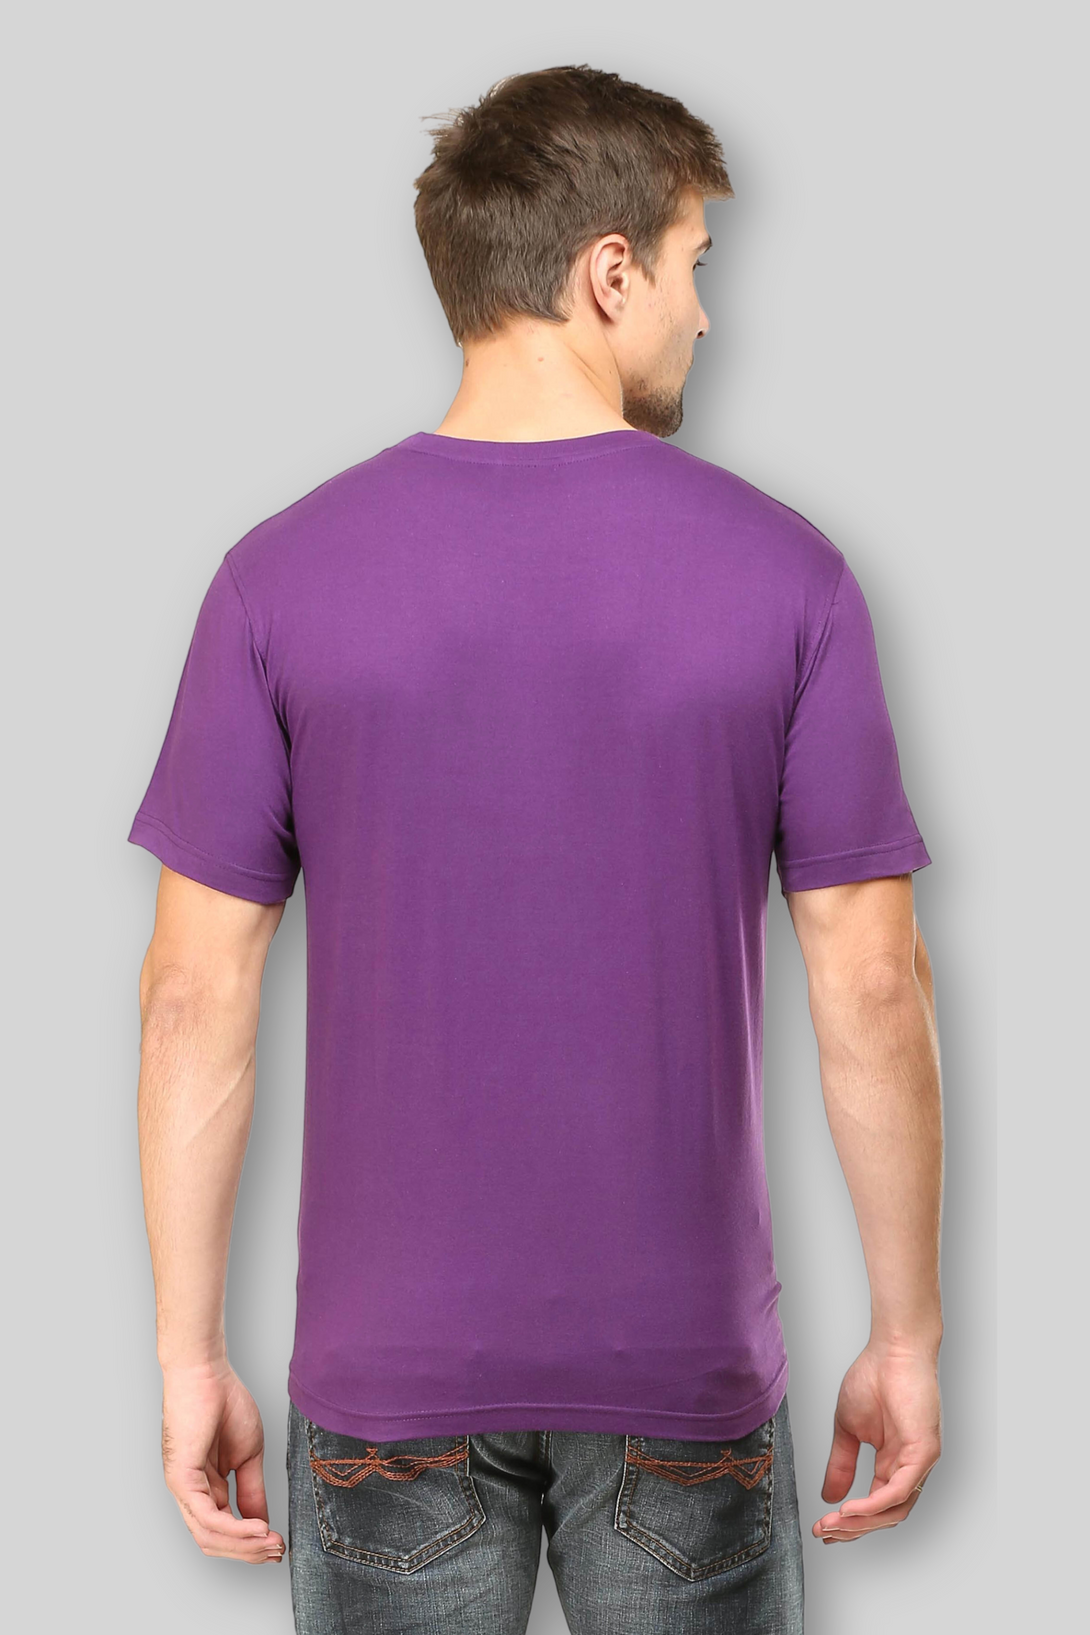 Purple T-Shirt For Men - WowWaves - 5